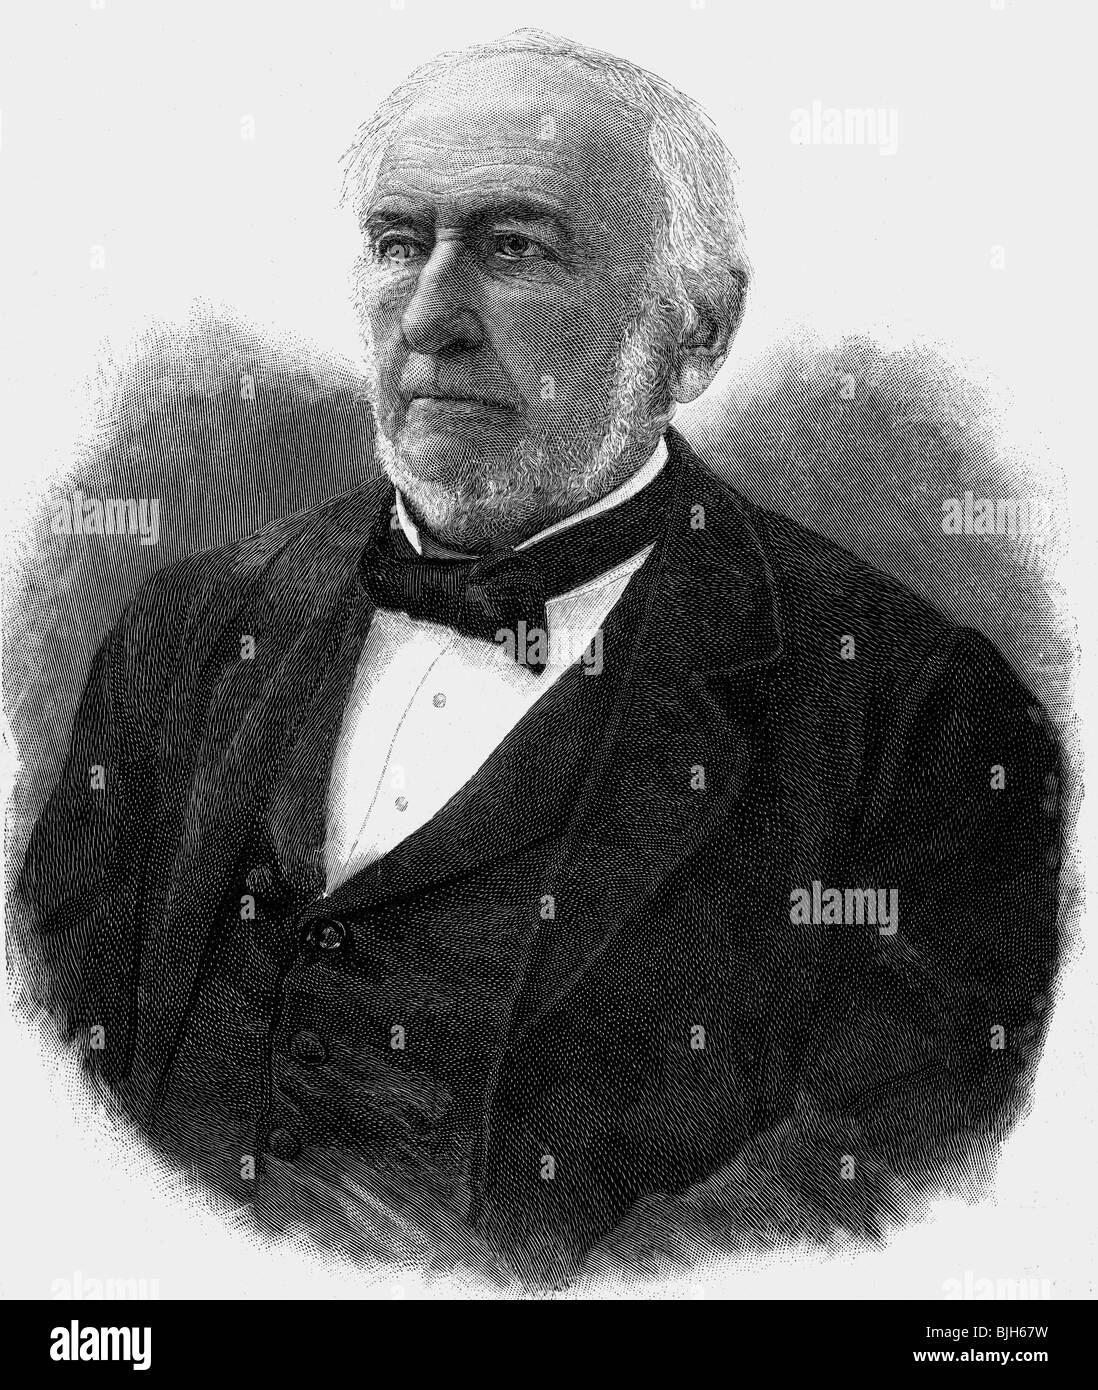 Gladstone, William Eward, 29.12.1809 - 19.5.1898, British politician (Lib.),portrait, wood engraving, 1898, , Stock Photo